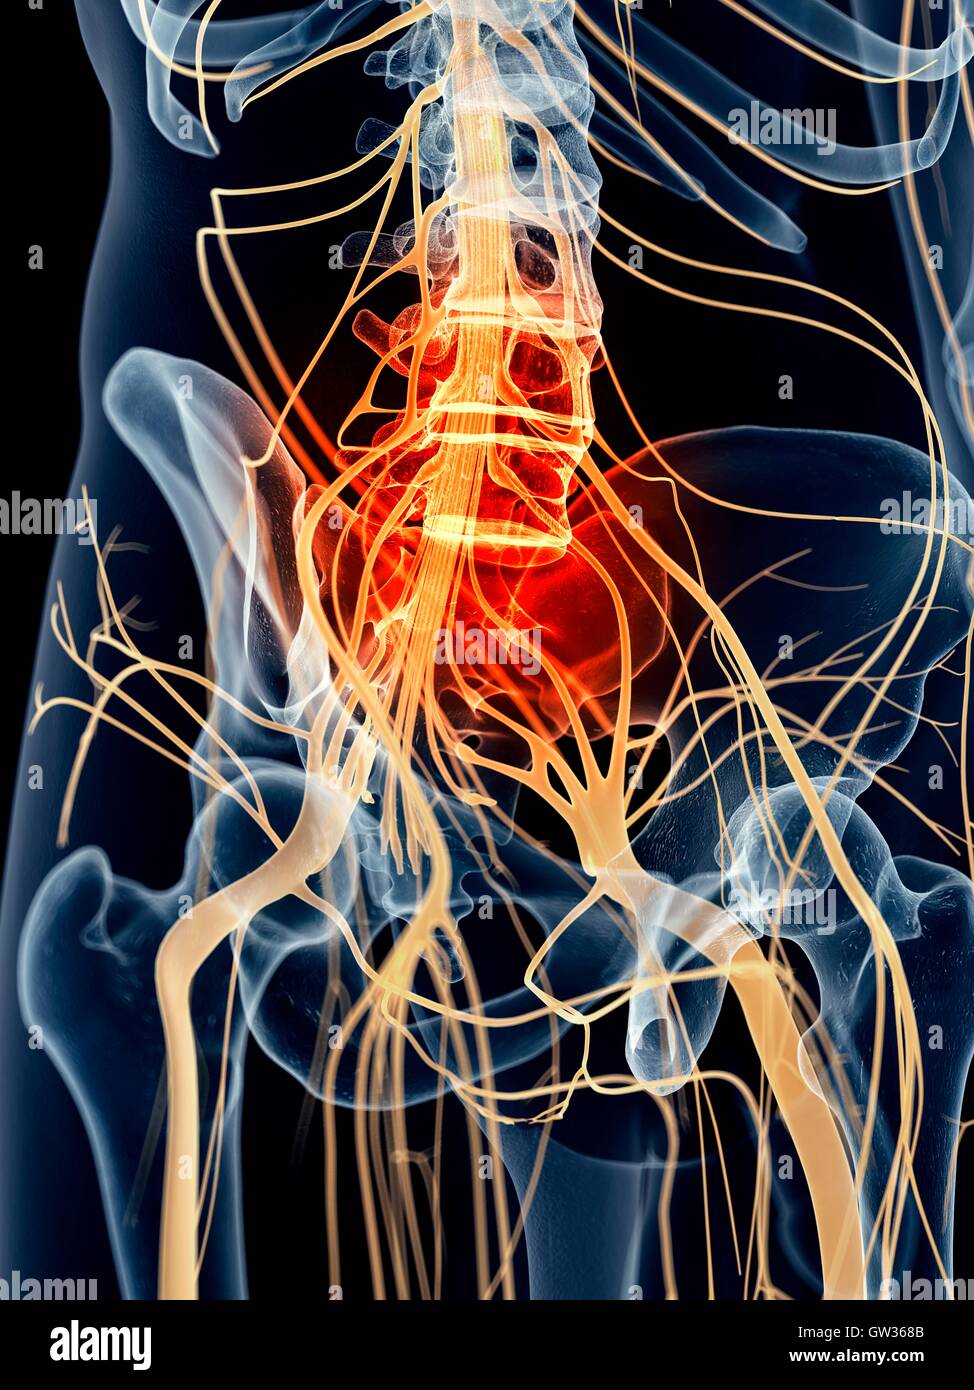 Human sacral nerve pain, illustration. Stock Photo